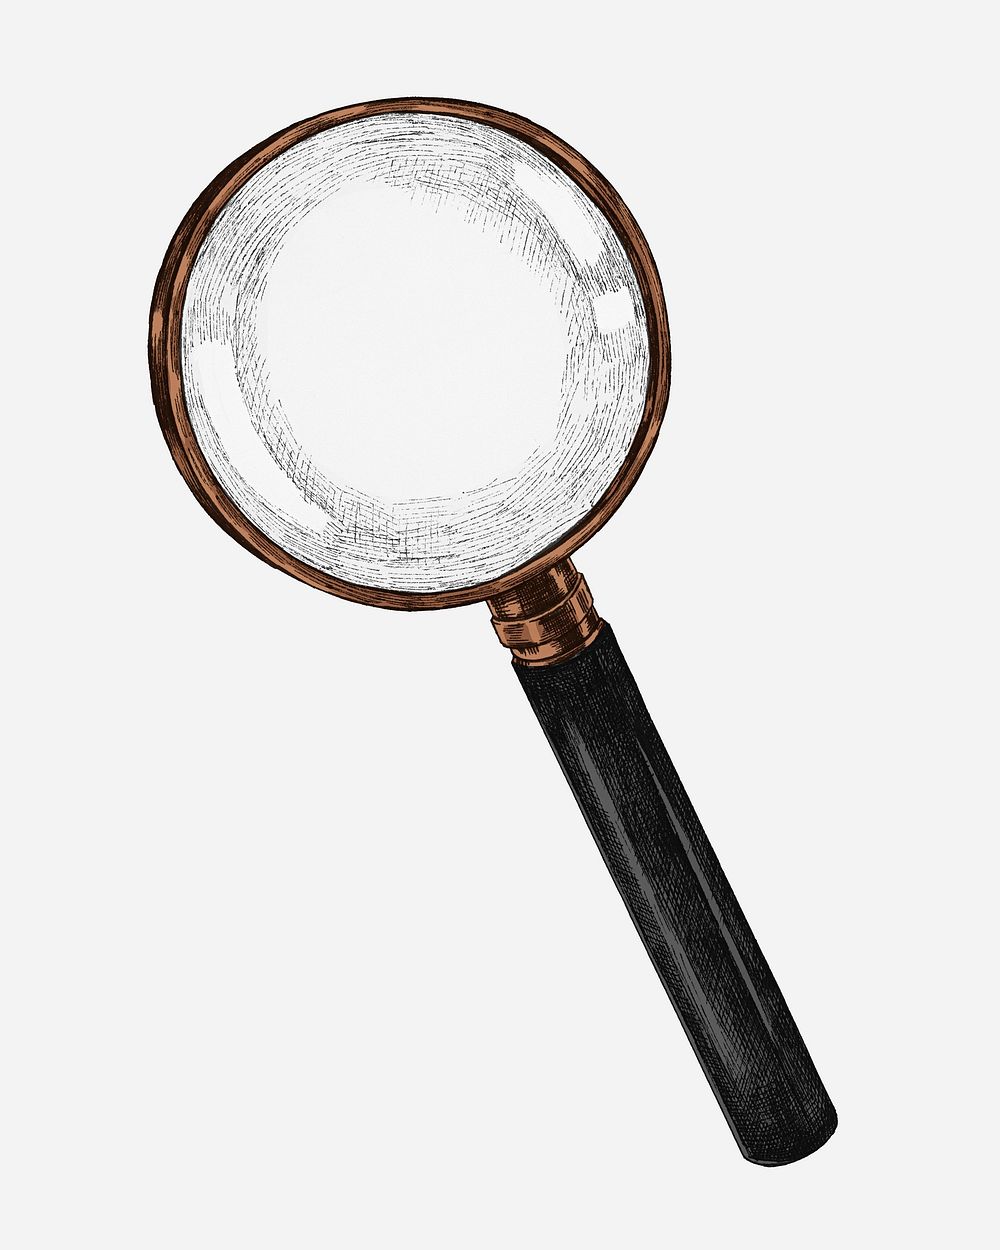 Hand drawn magnifying glass illustration